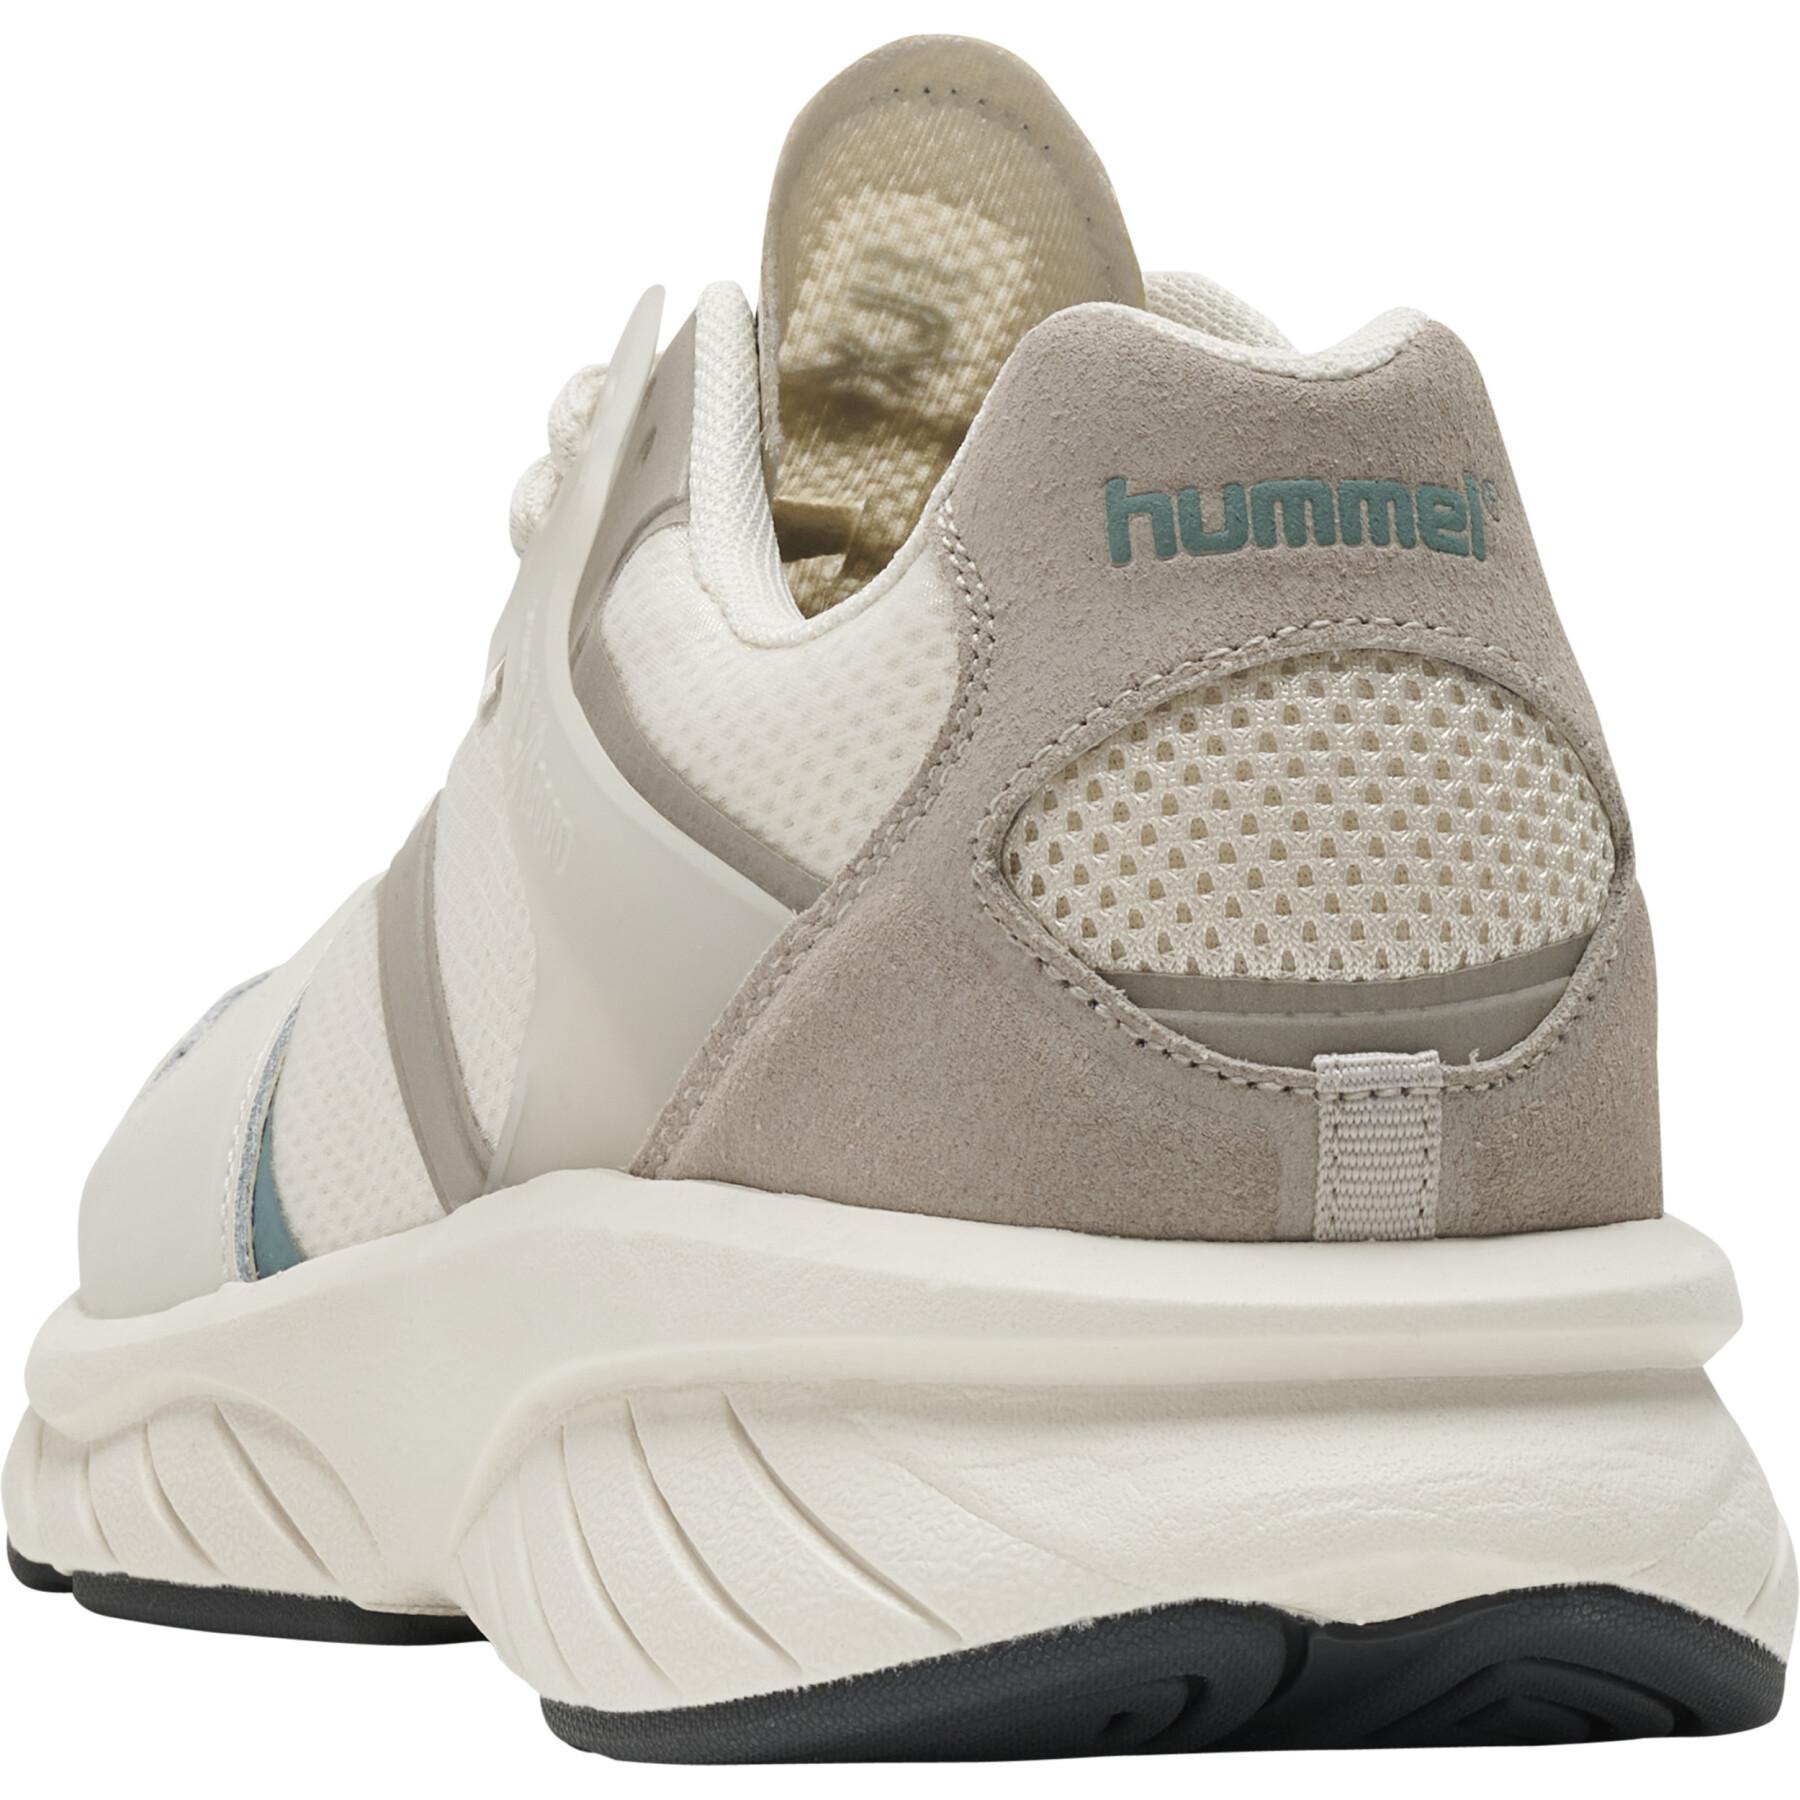 Sneakers Hummel 